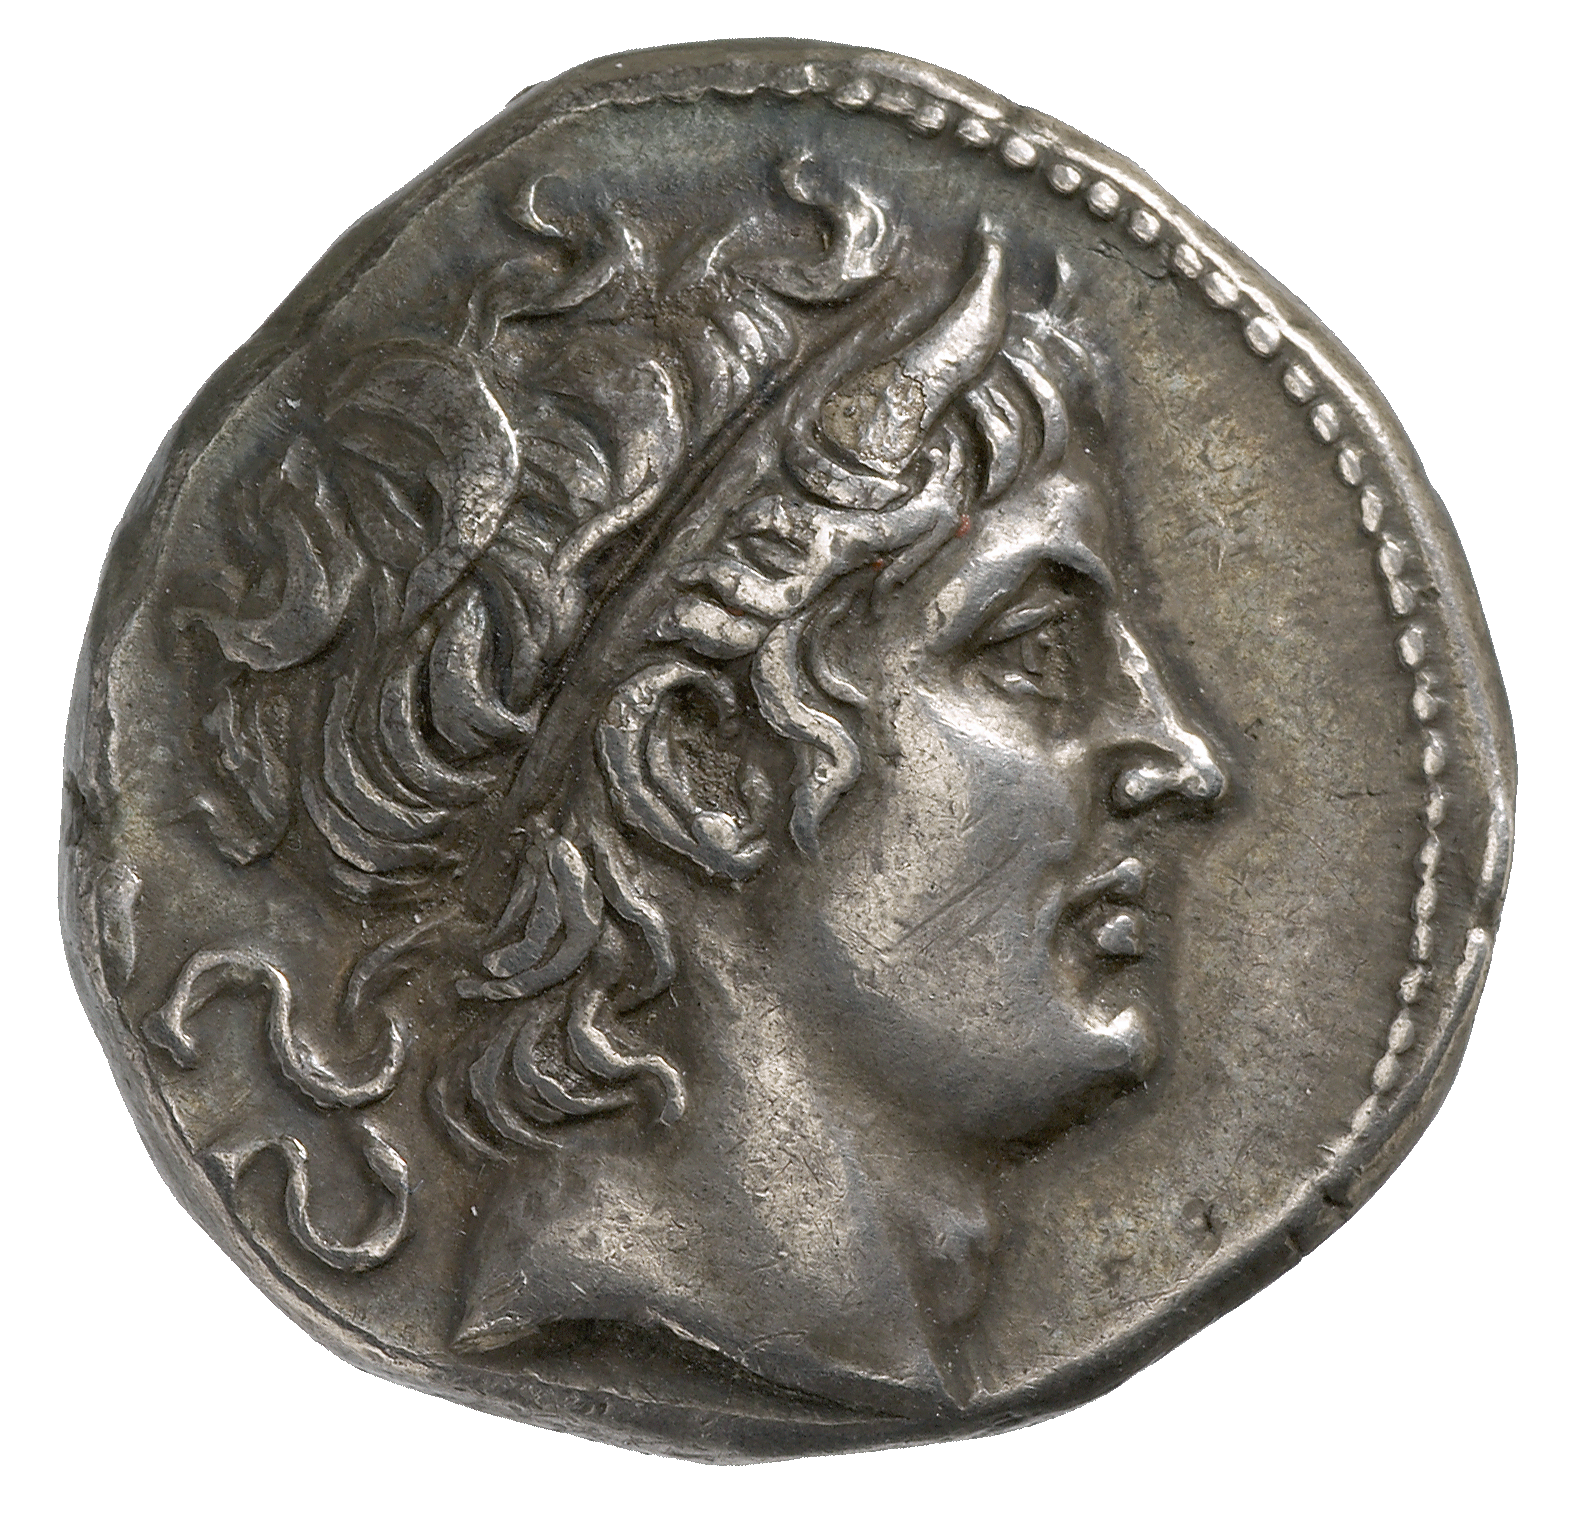 Kingdom of Macedon, Demetrius I Poliorcetes, Tetradrachm (obverse)